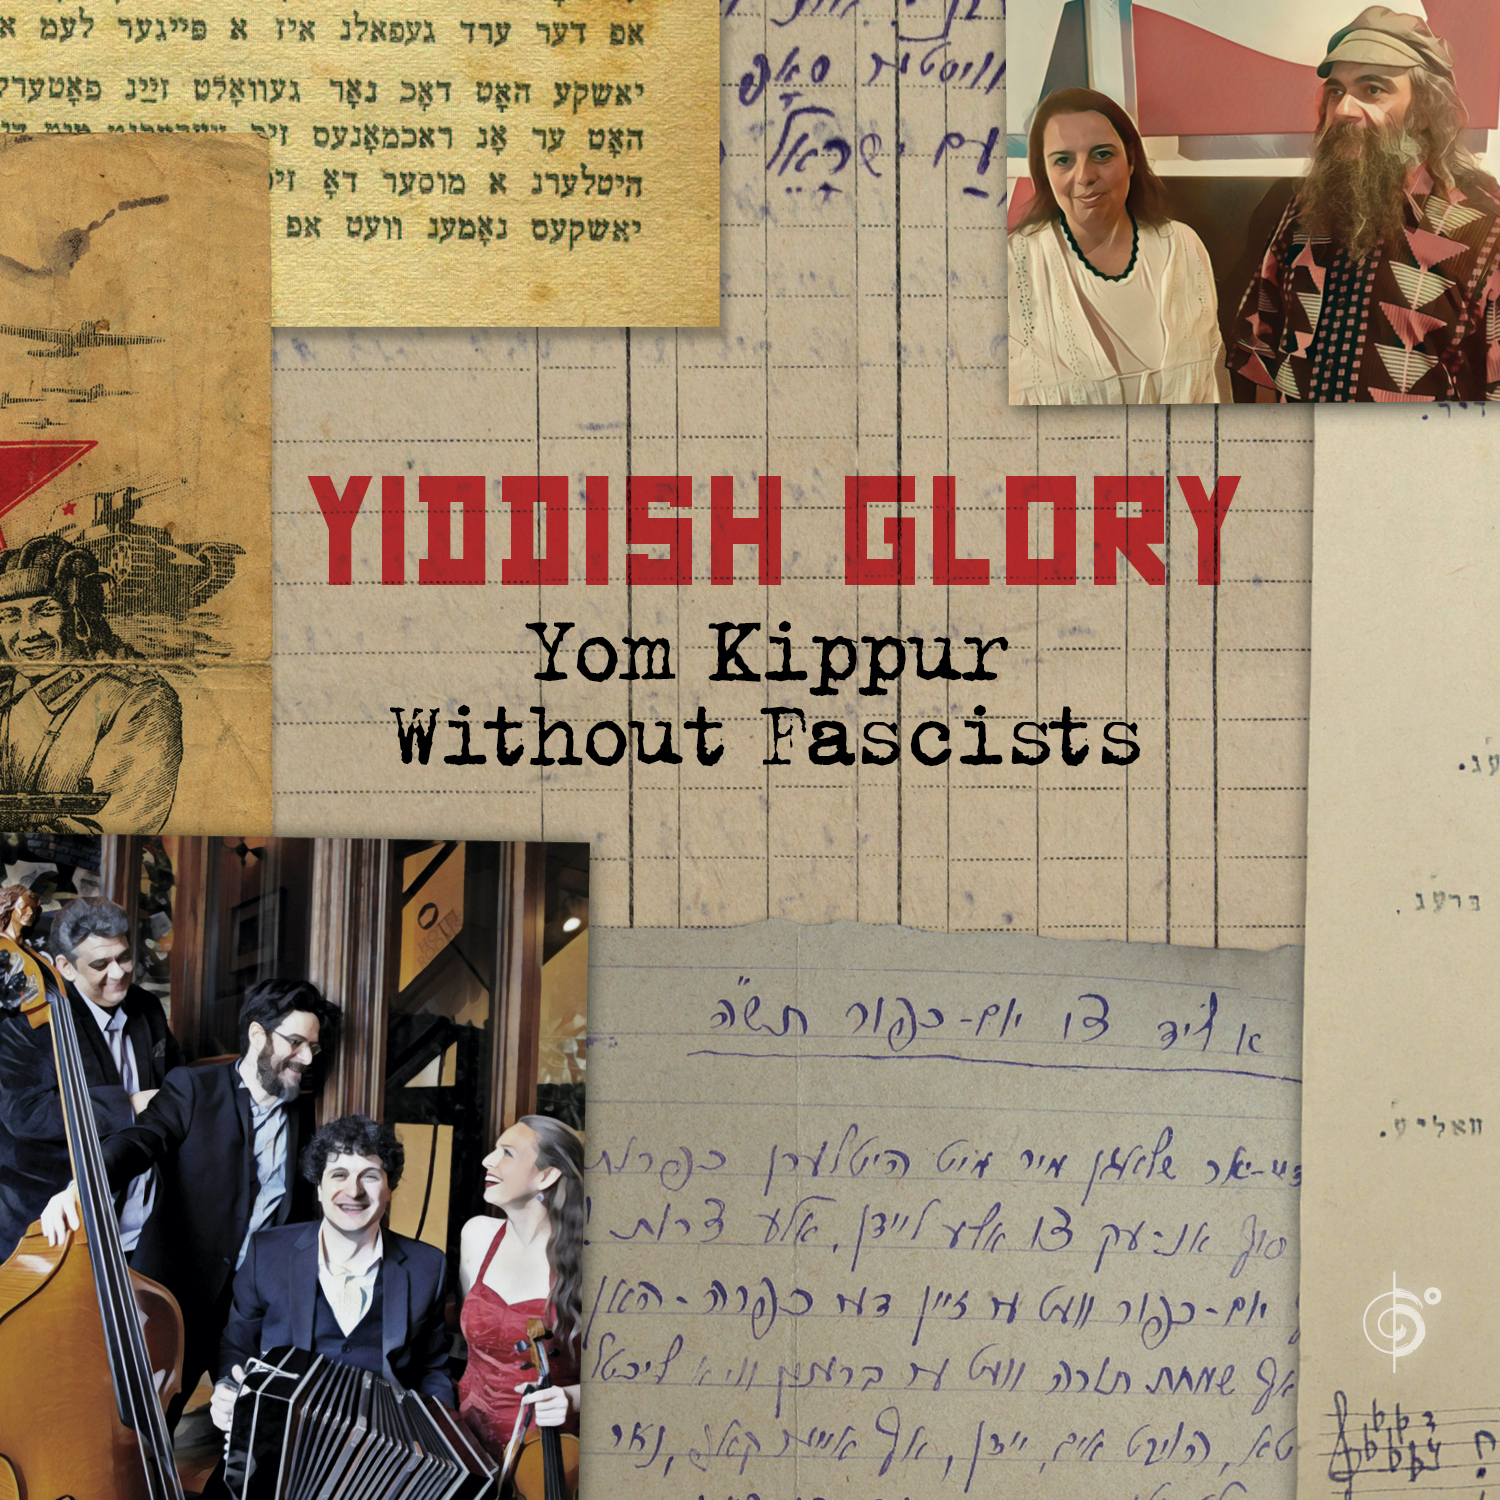 Yiddish Glory – Yom Kippur Without Fascists